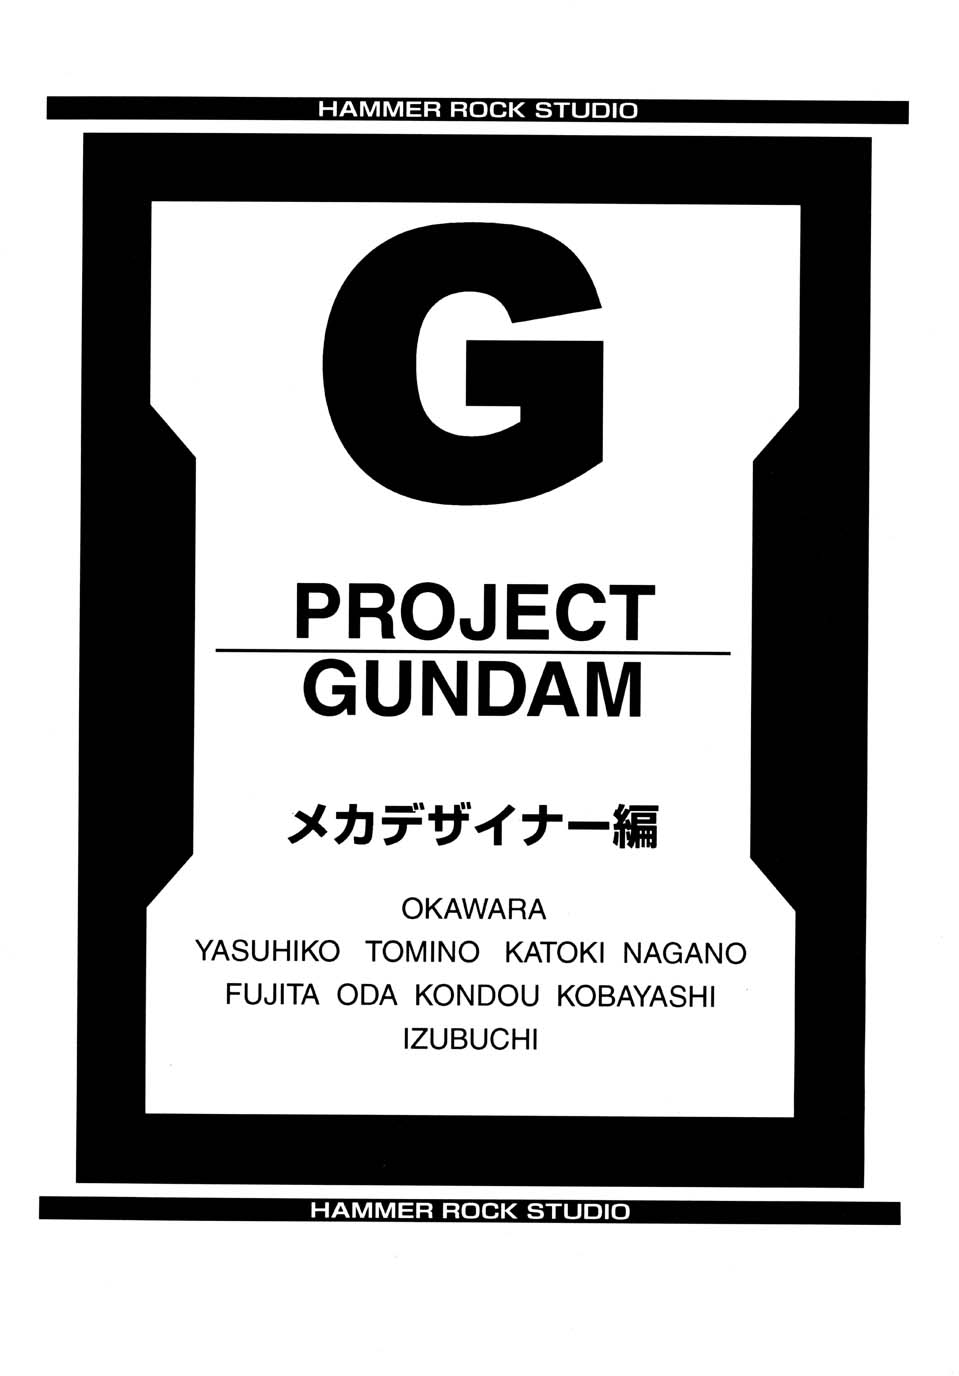 [Studio Hammer Rock] Gundam-H Vol. 03 [Gundam Seed] 